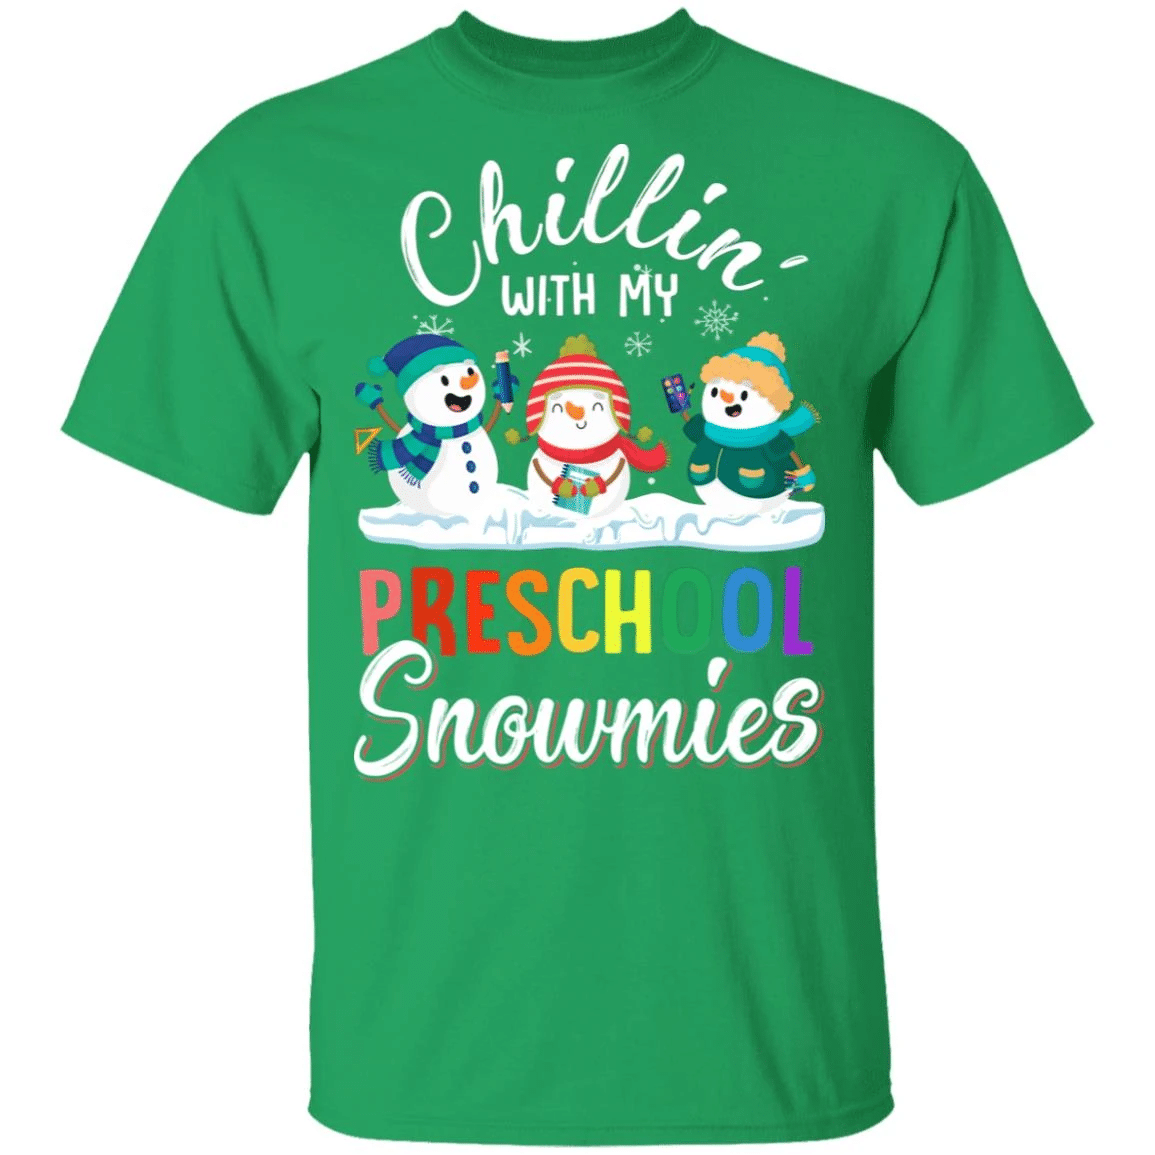 Chillin' With preschool Snowmies Funny Snowman Christmas Shirt Style: Unisex T-shirt, Color: Irish Green